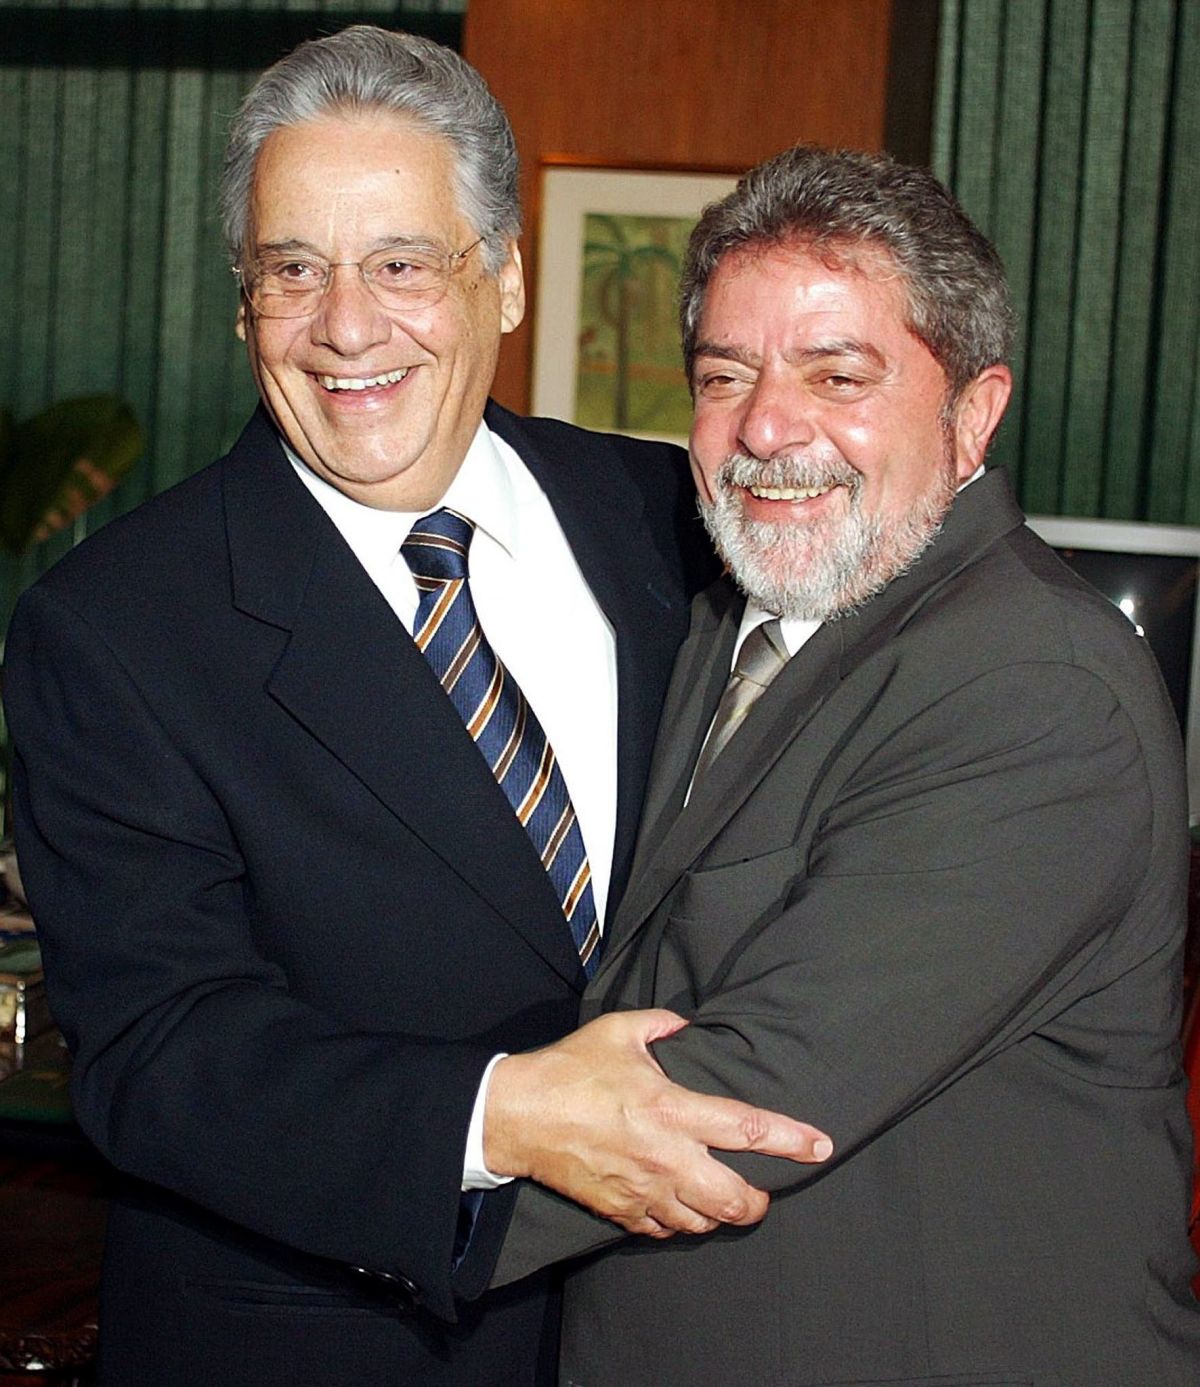 Fernando Henrique Cardoso and Lula da Silva in the fall of 2002.